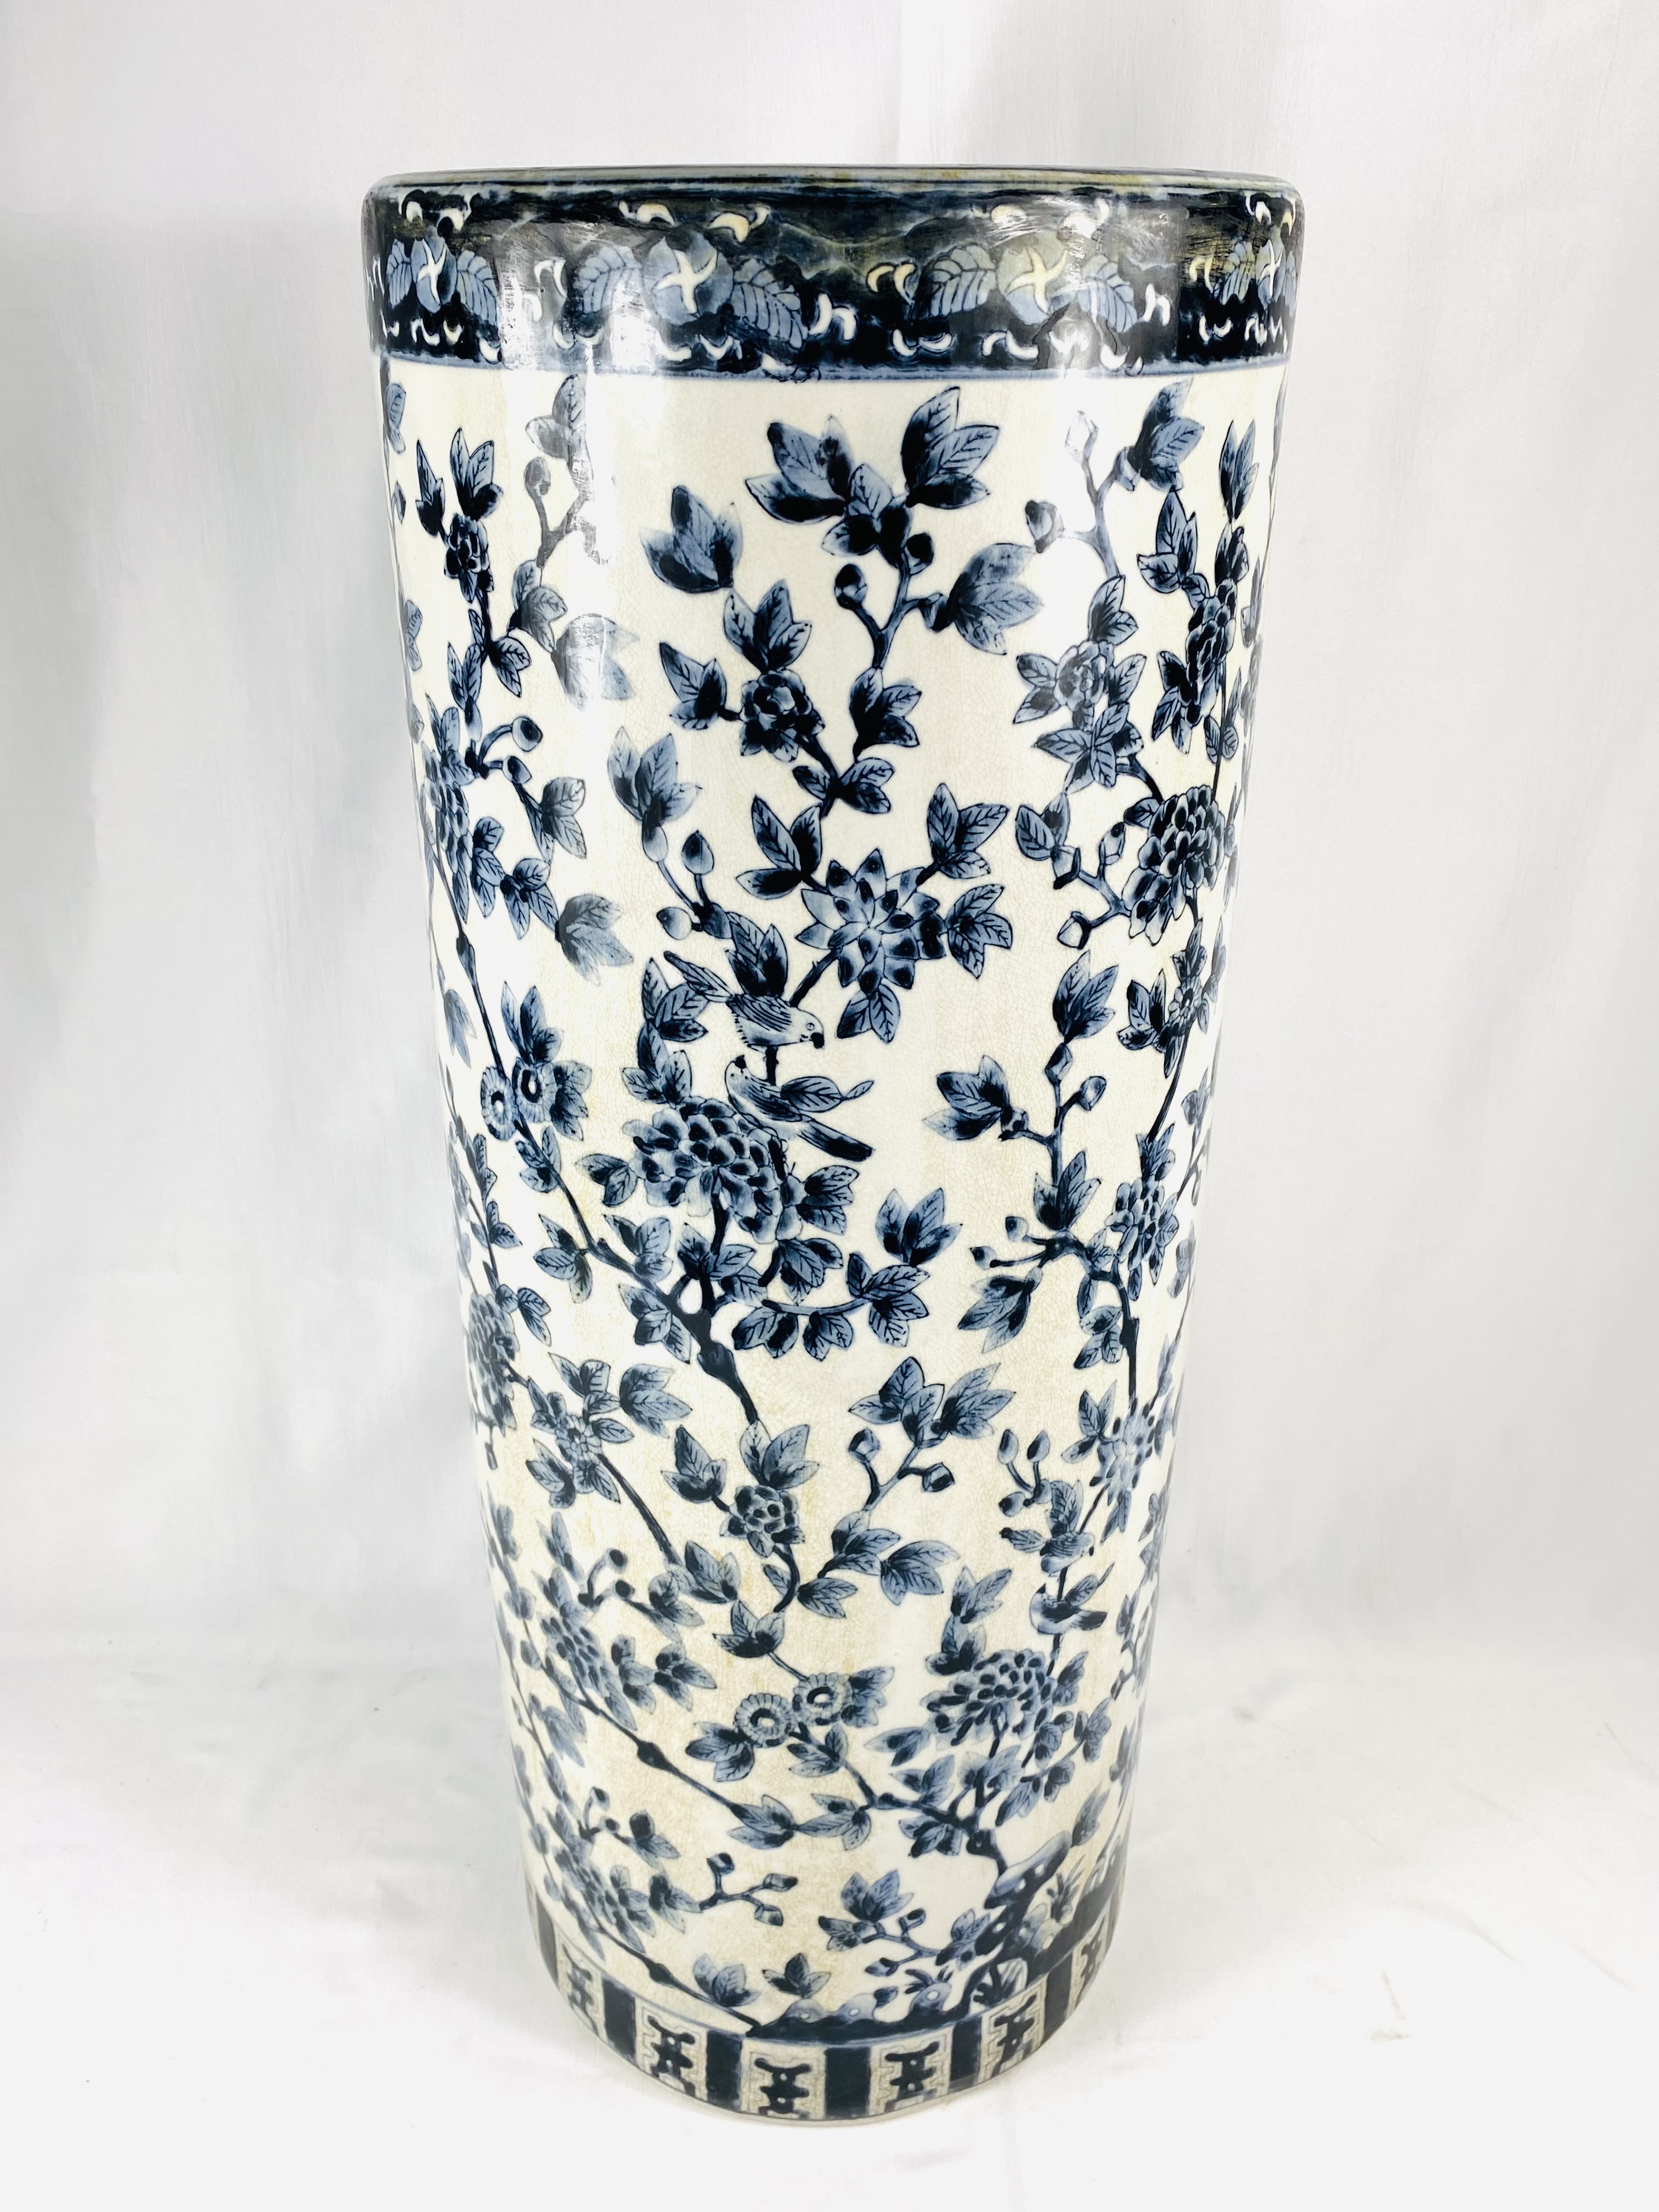 Ceramic blue and white stick stand